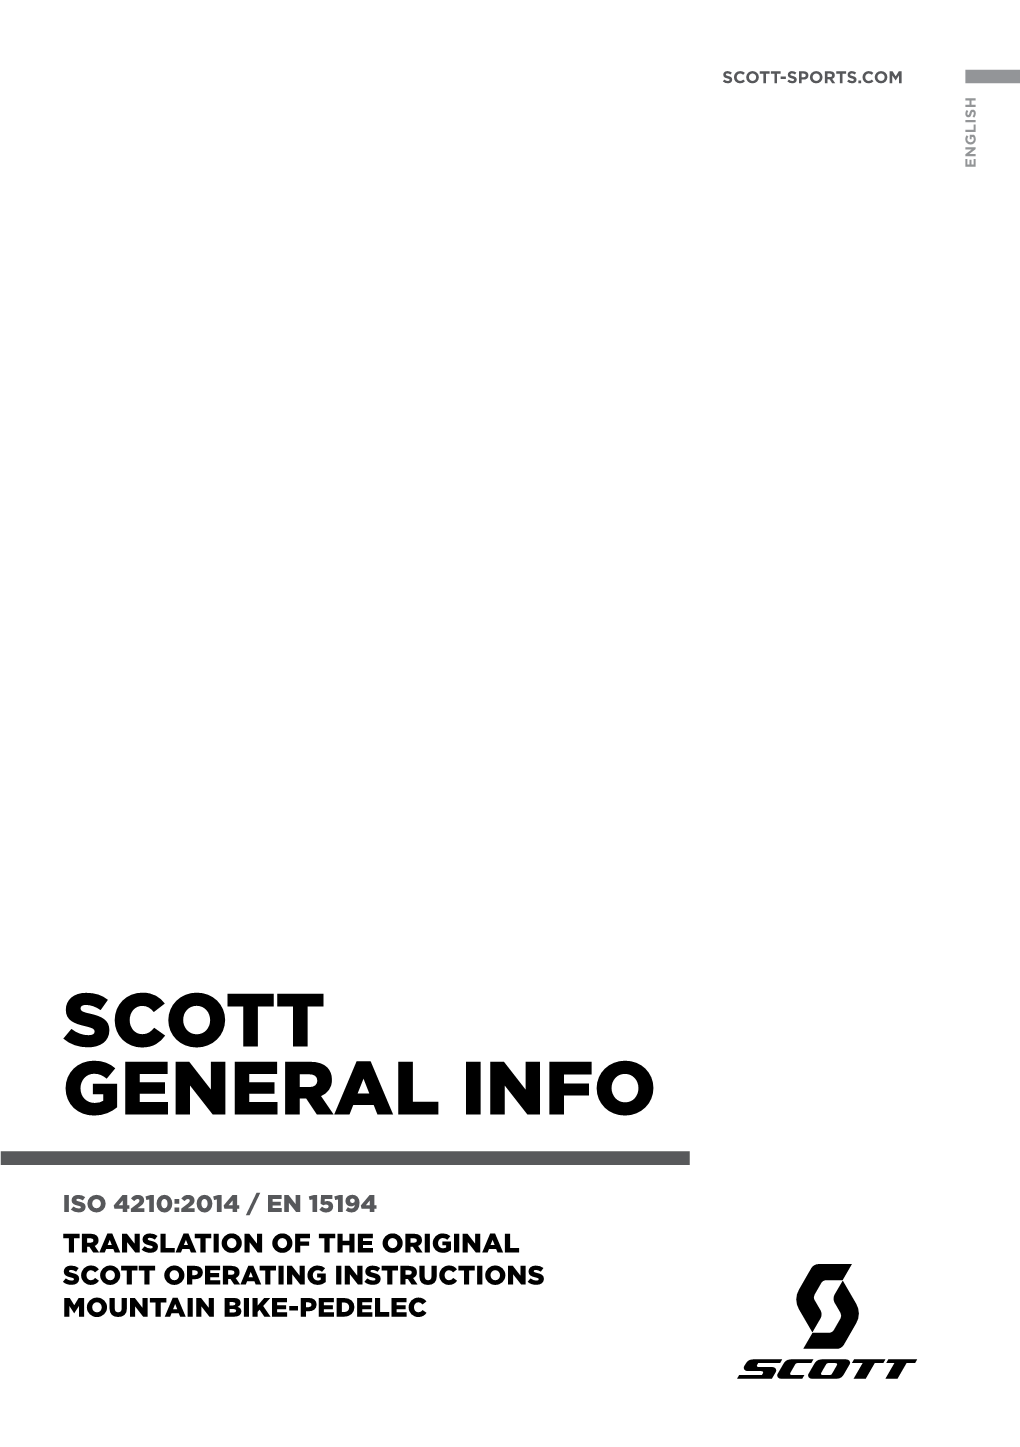 Scott General Info